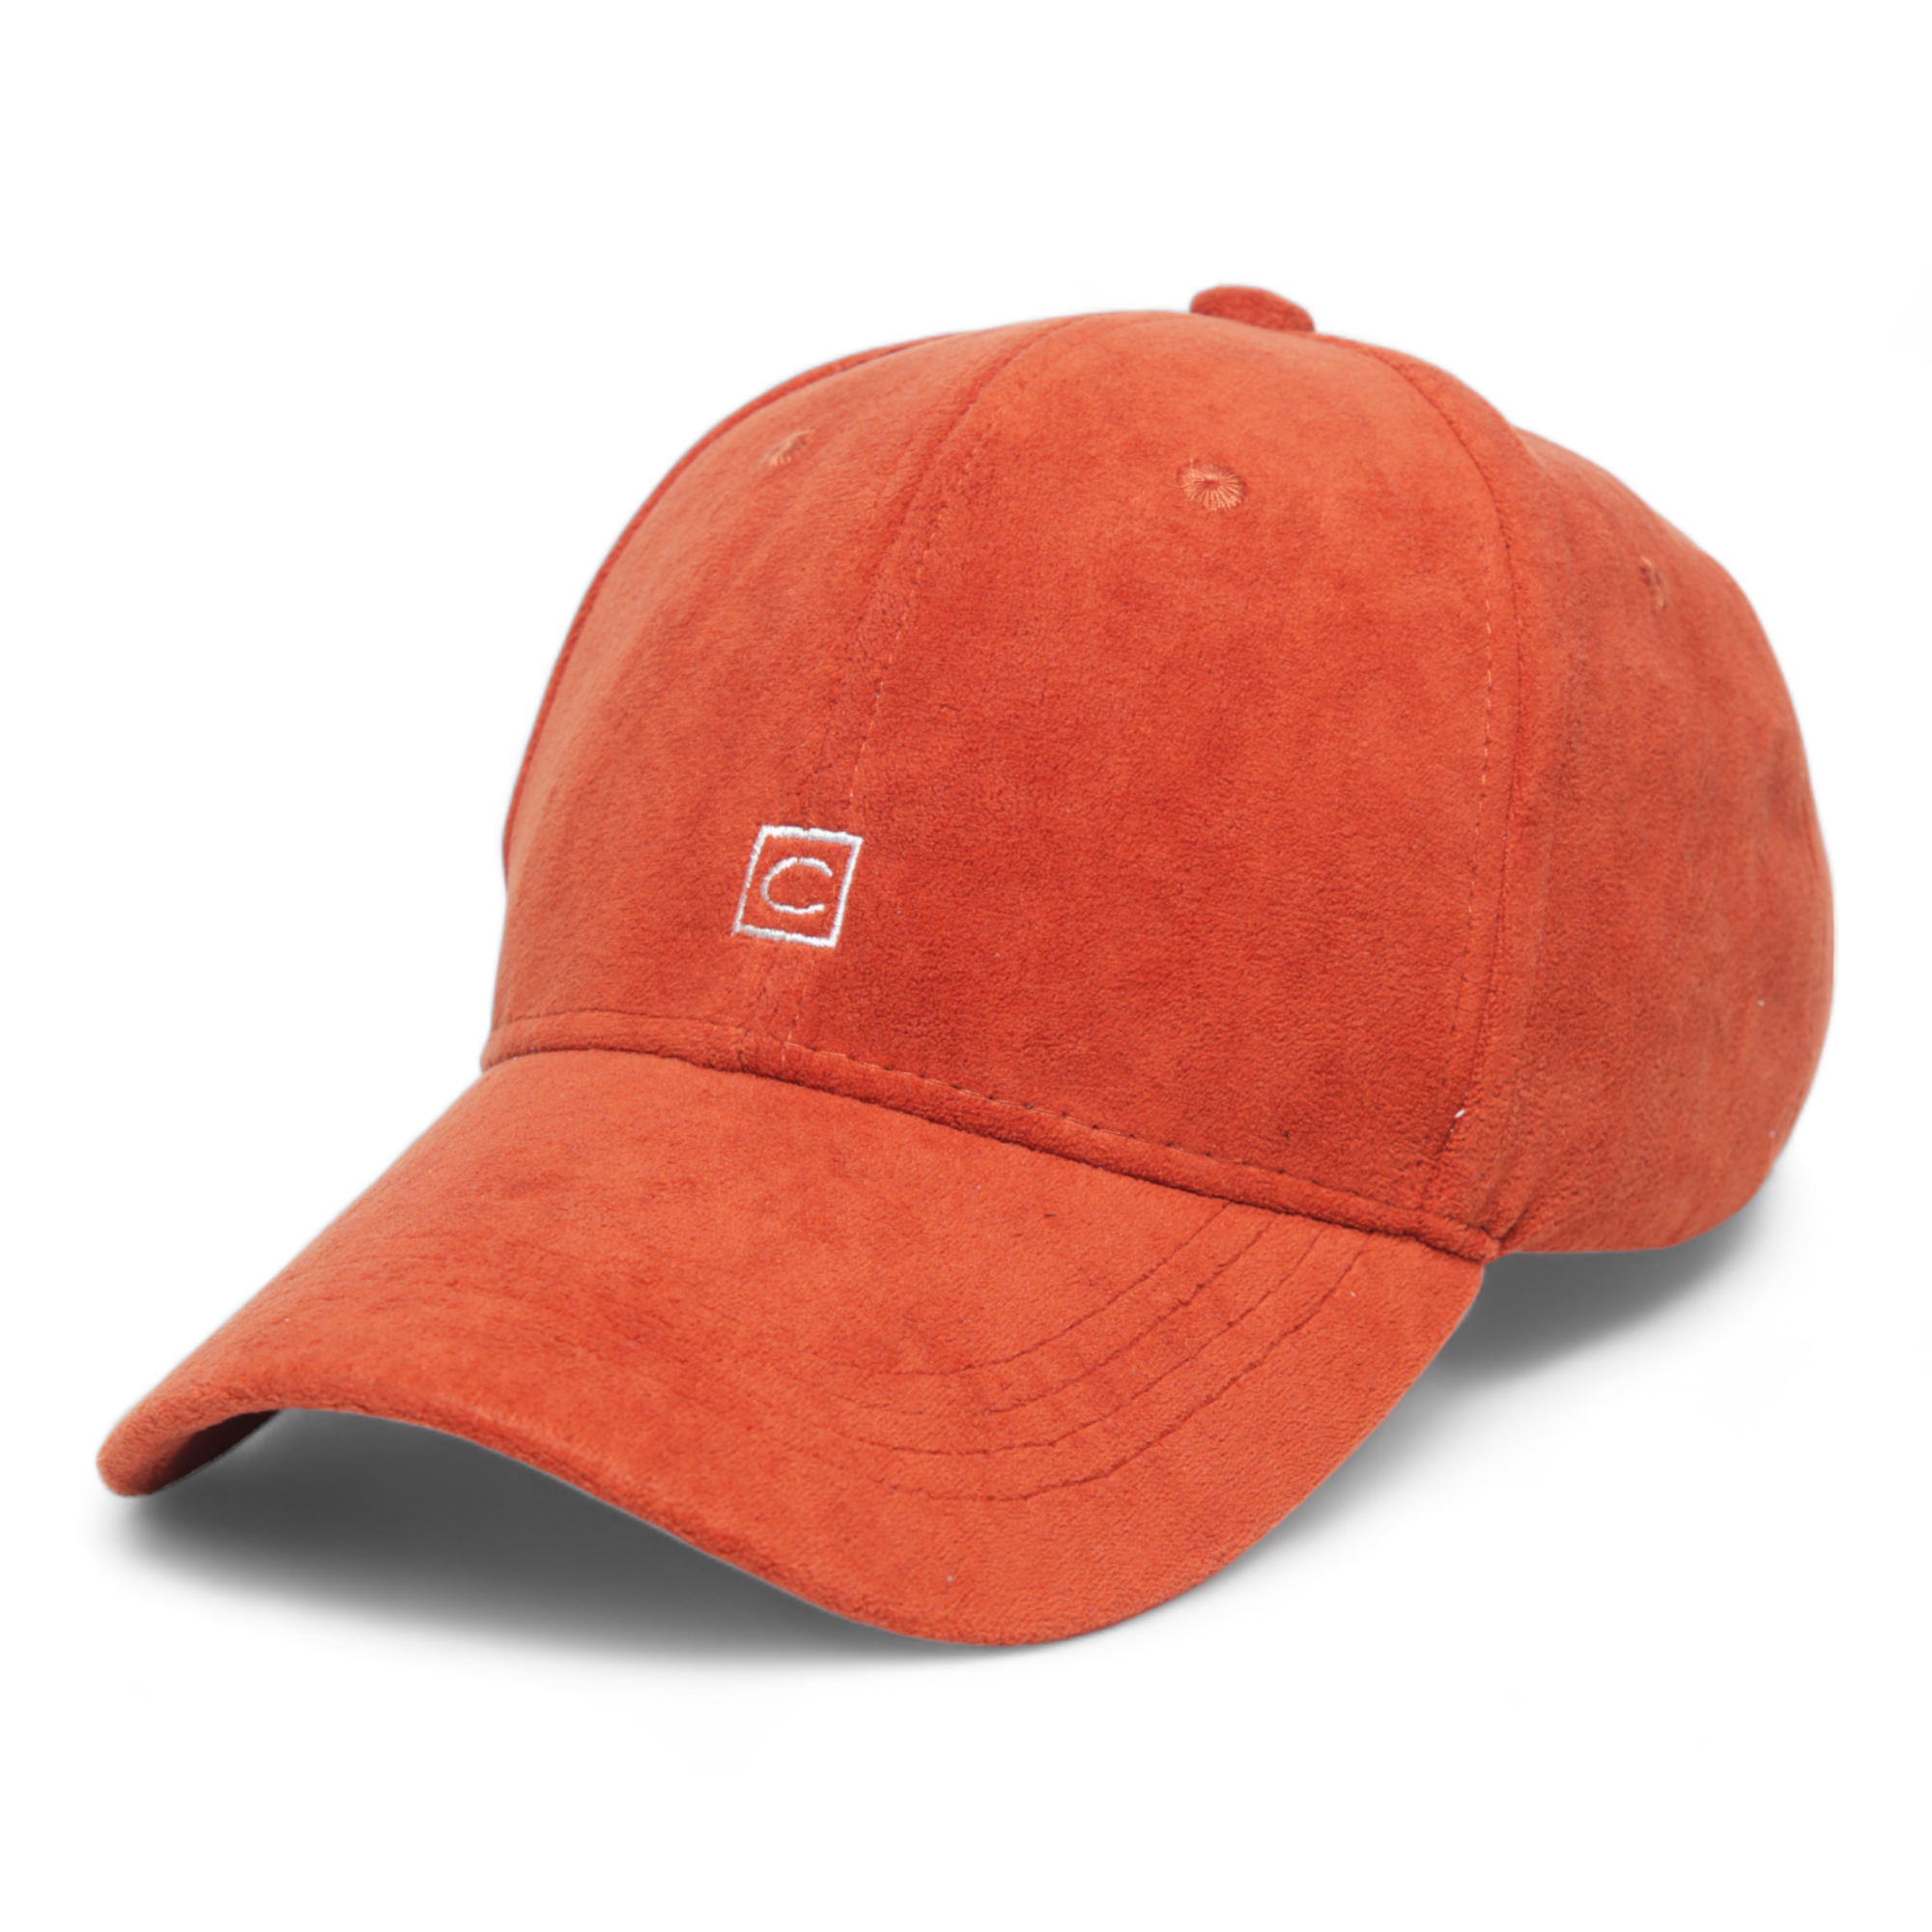 Chokore Structured Suede Baseball Cap (Orange)